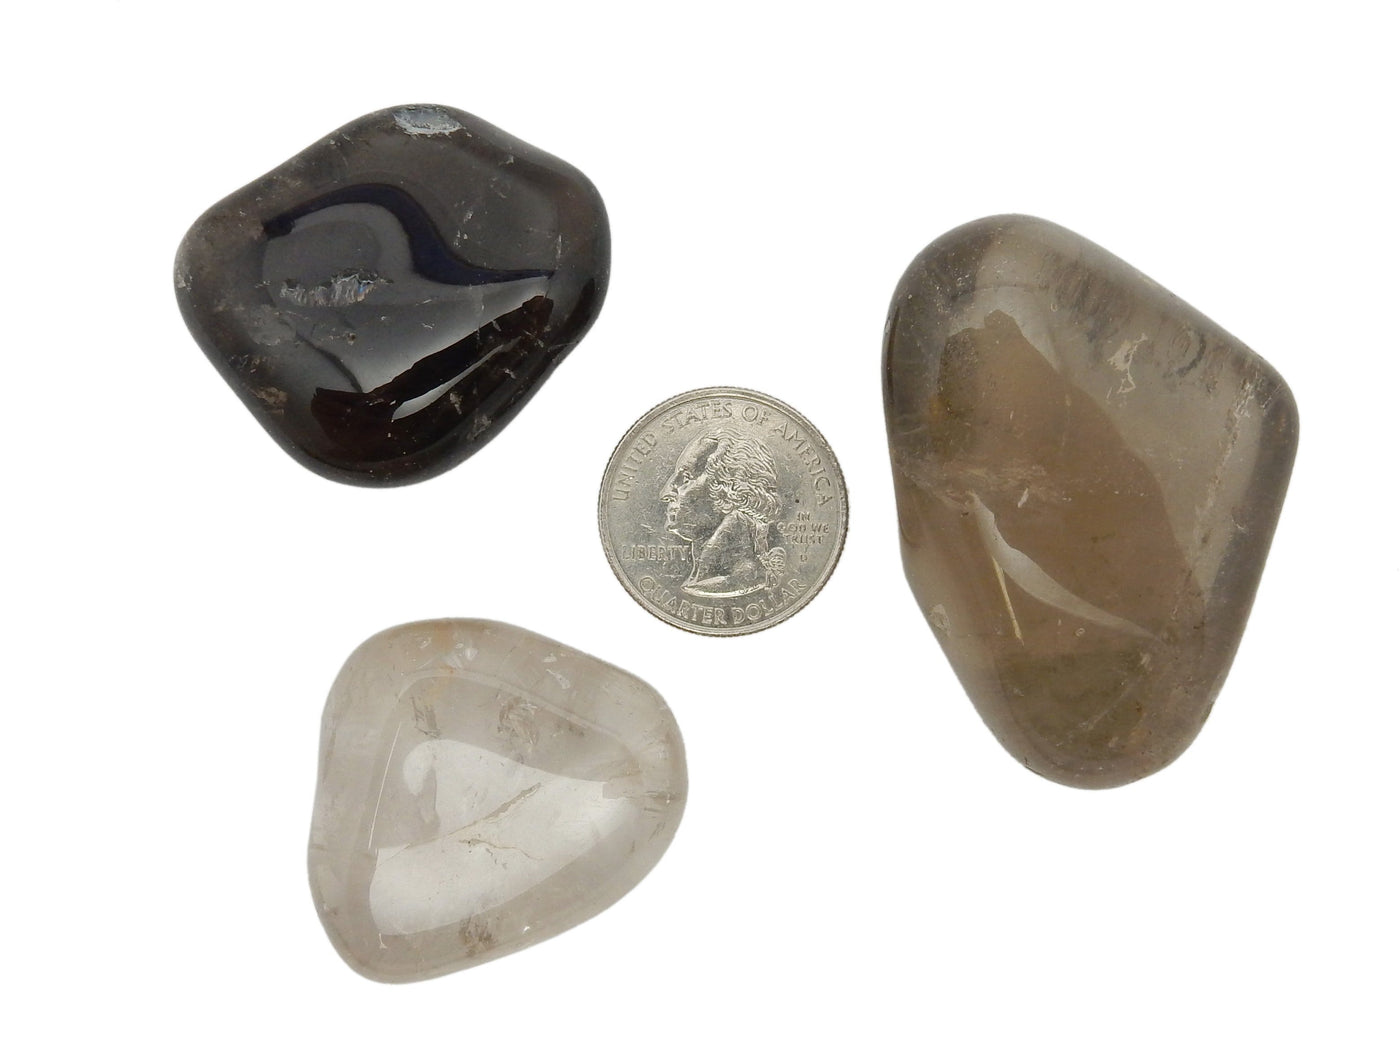 three smokey quartz tumbled gemstones on white background with quarter for size reference